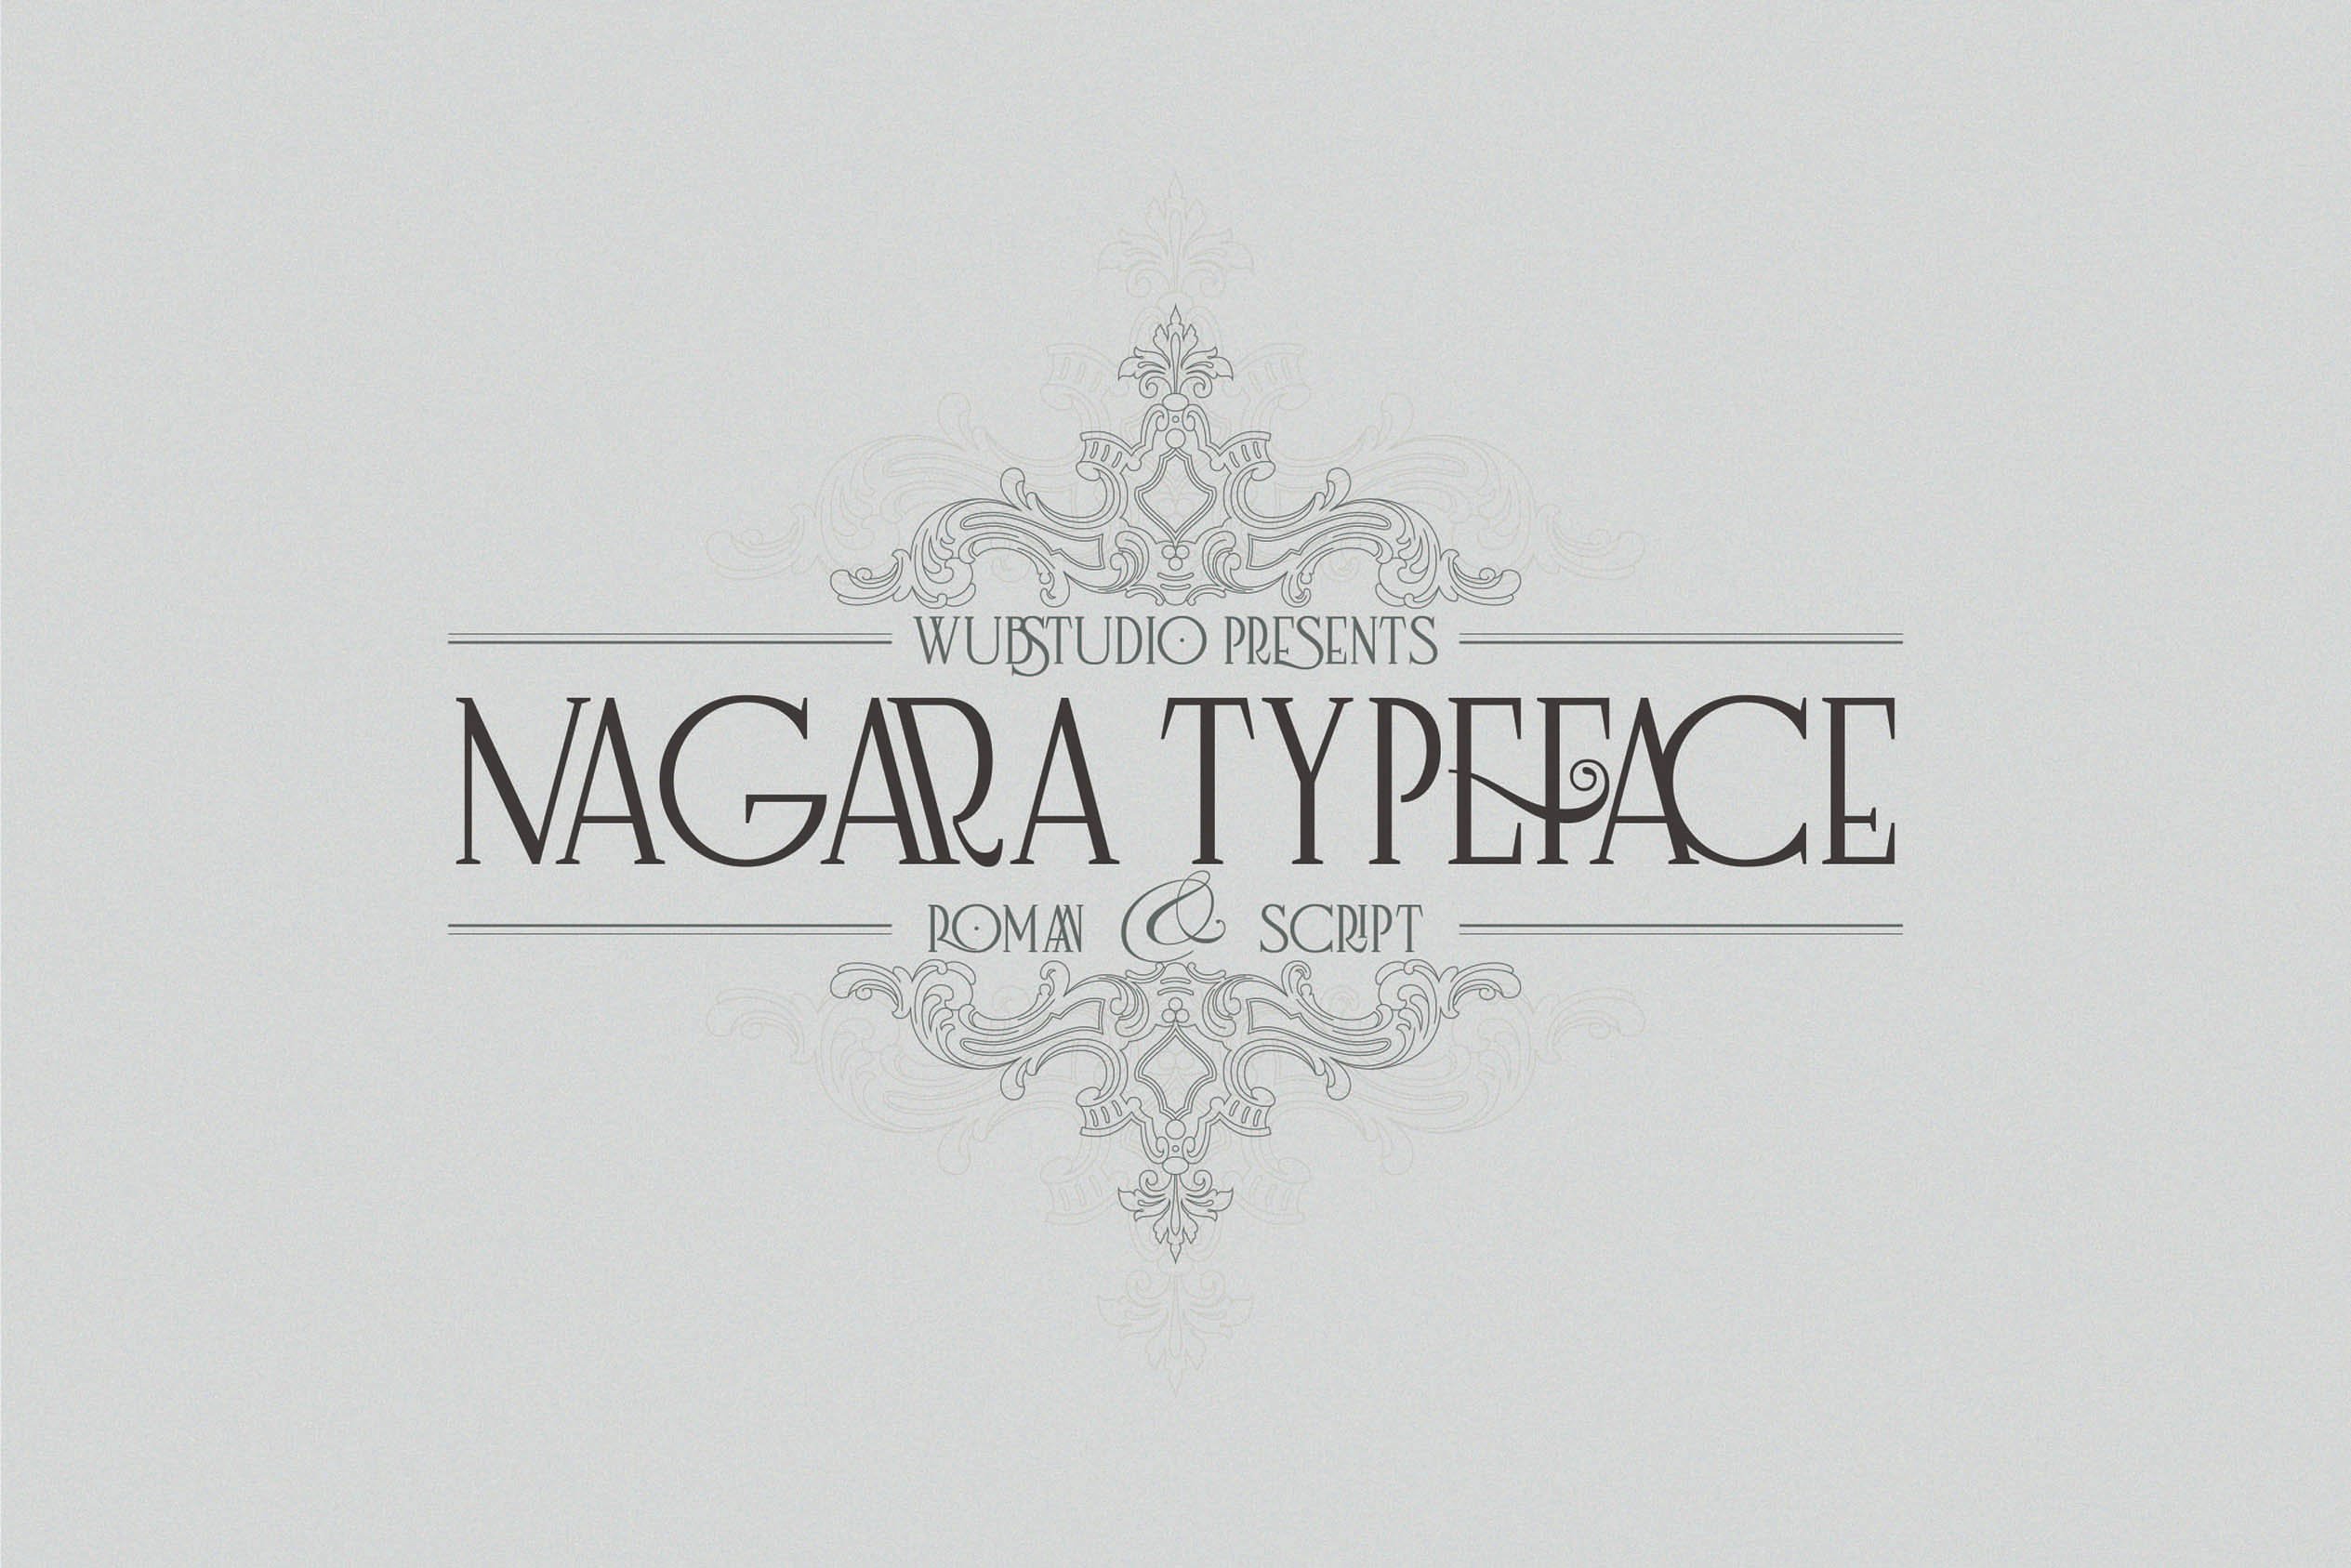 Nagara Typeface (Roman & Script) preview image.